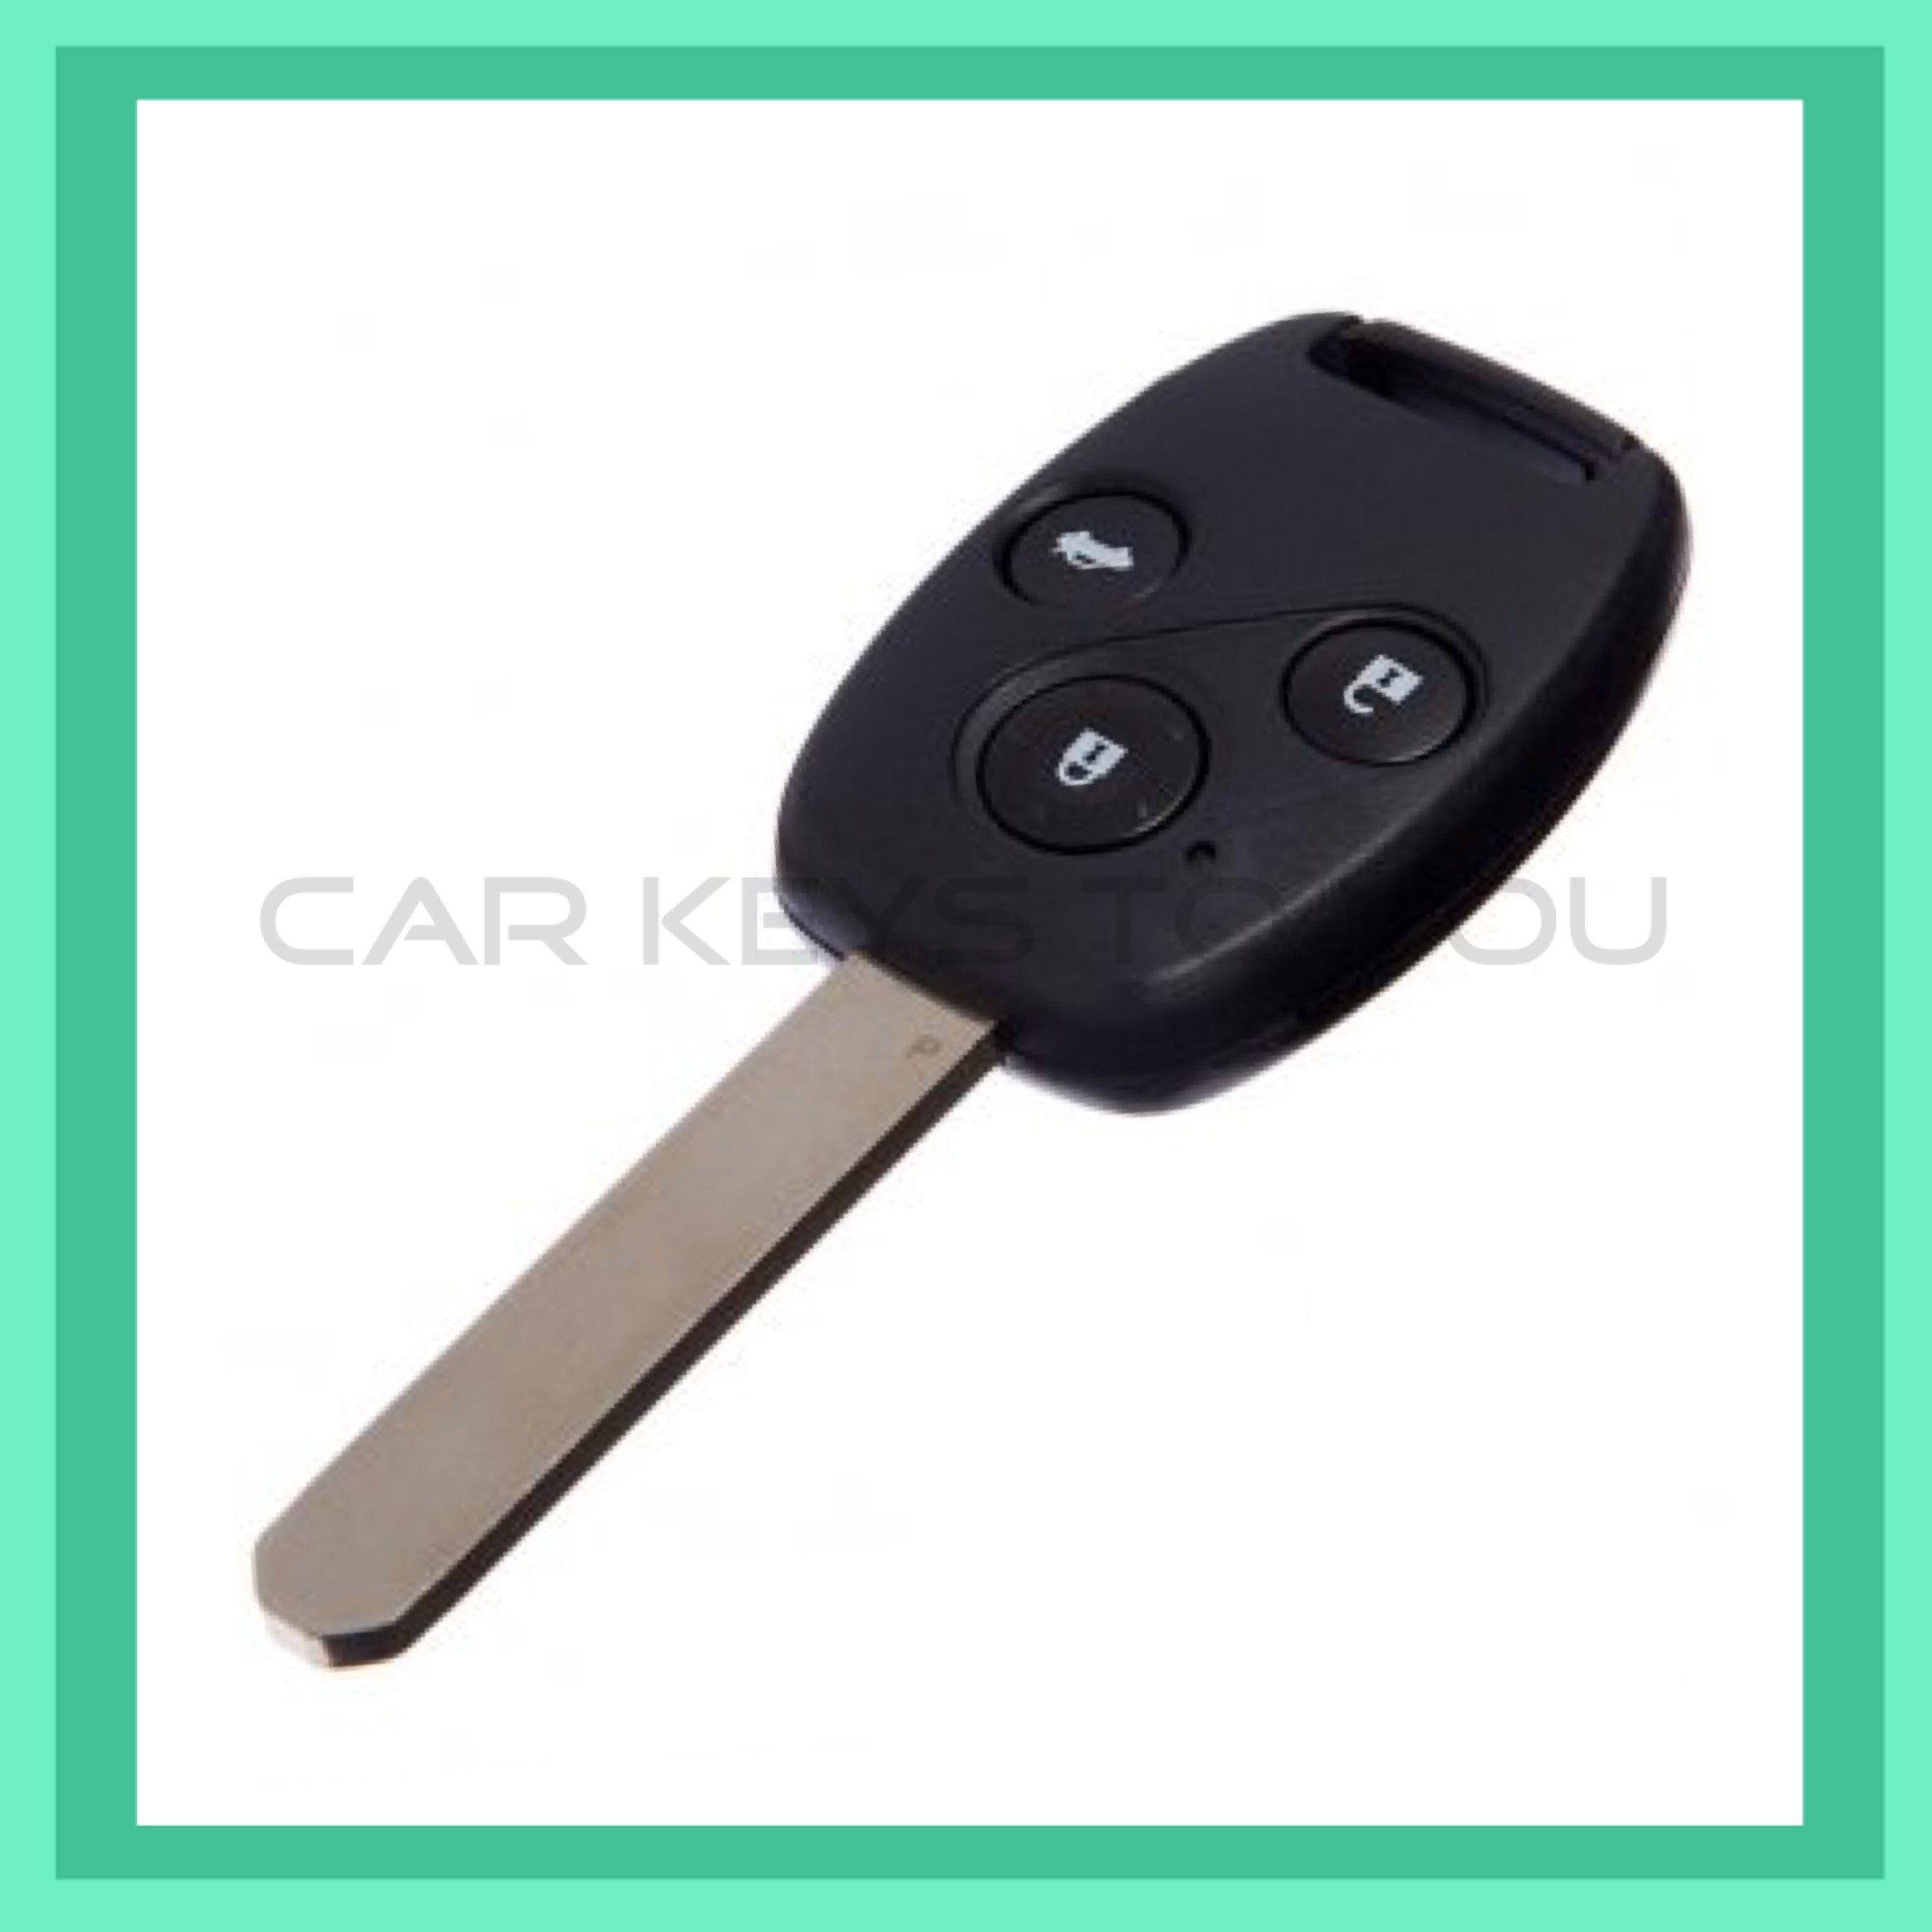 Honda Civic Car Key and Remote, Suit 9th Gen 2012-2015